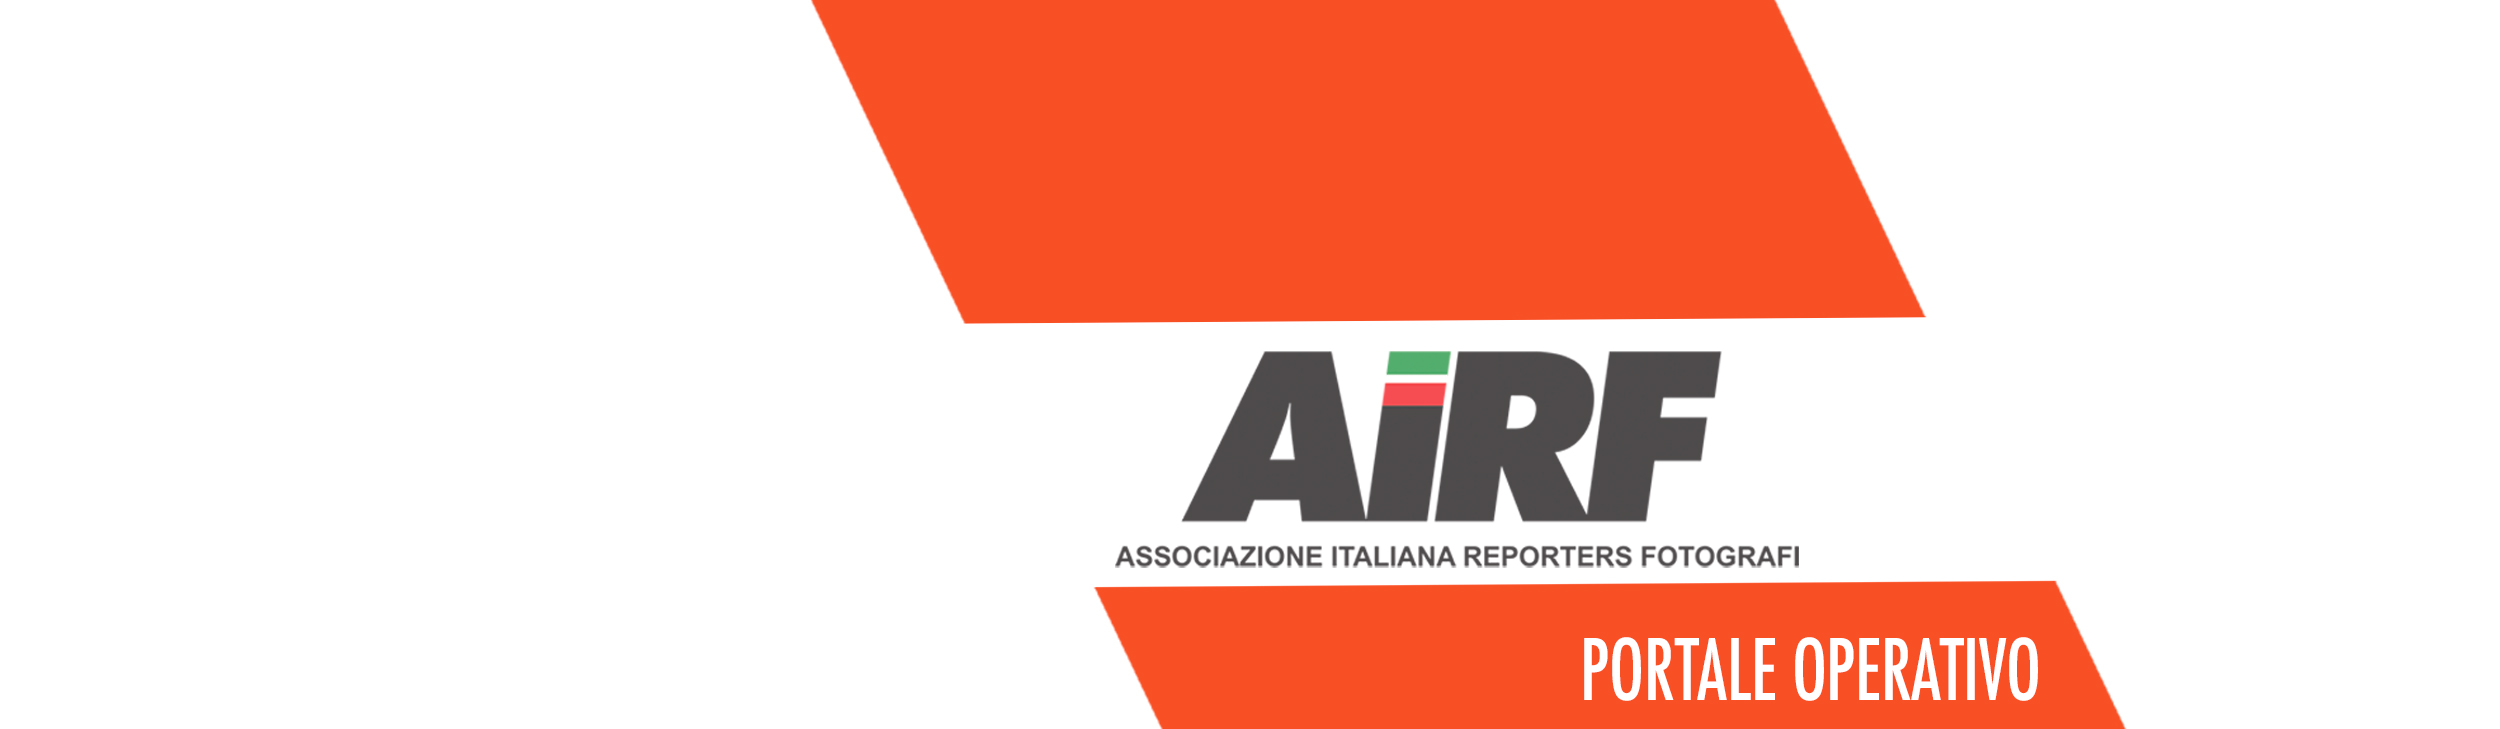 AIRF - Associazione Italiana Reporters Fotografi